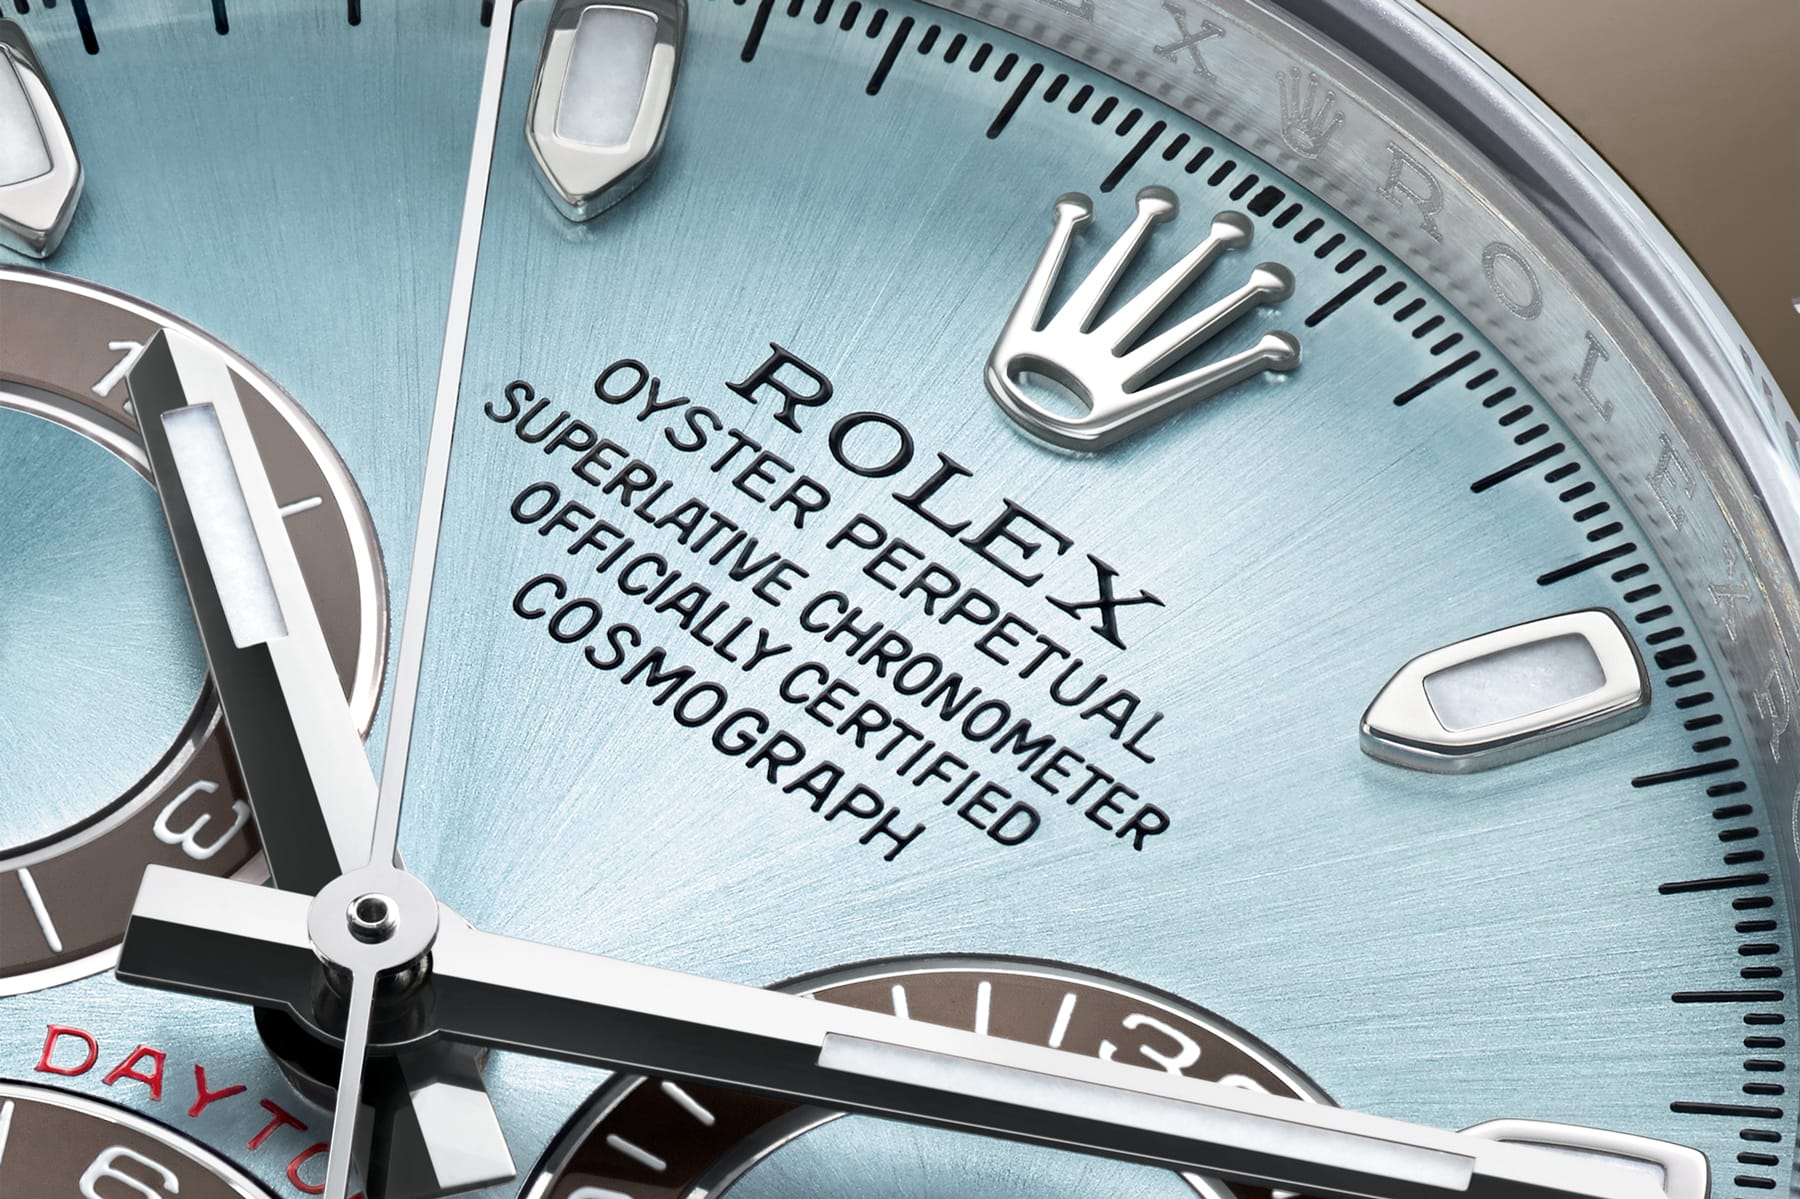 rolex official chronometer certification